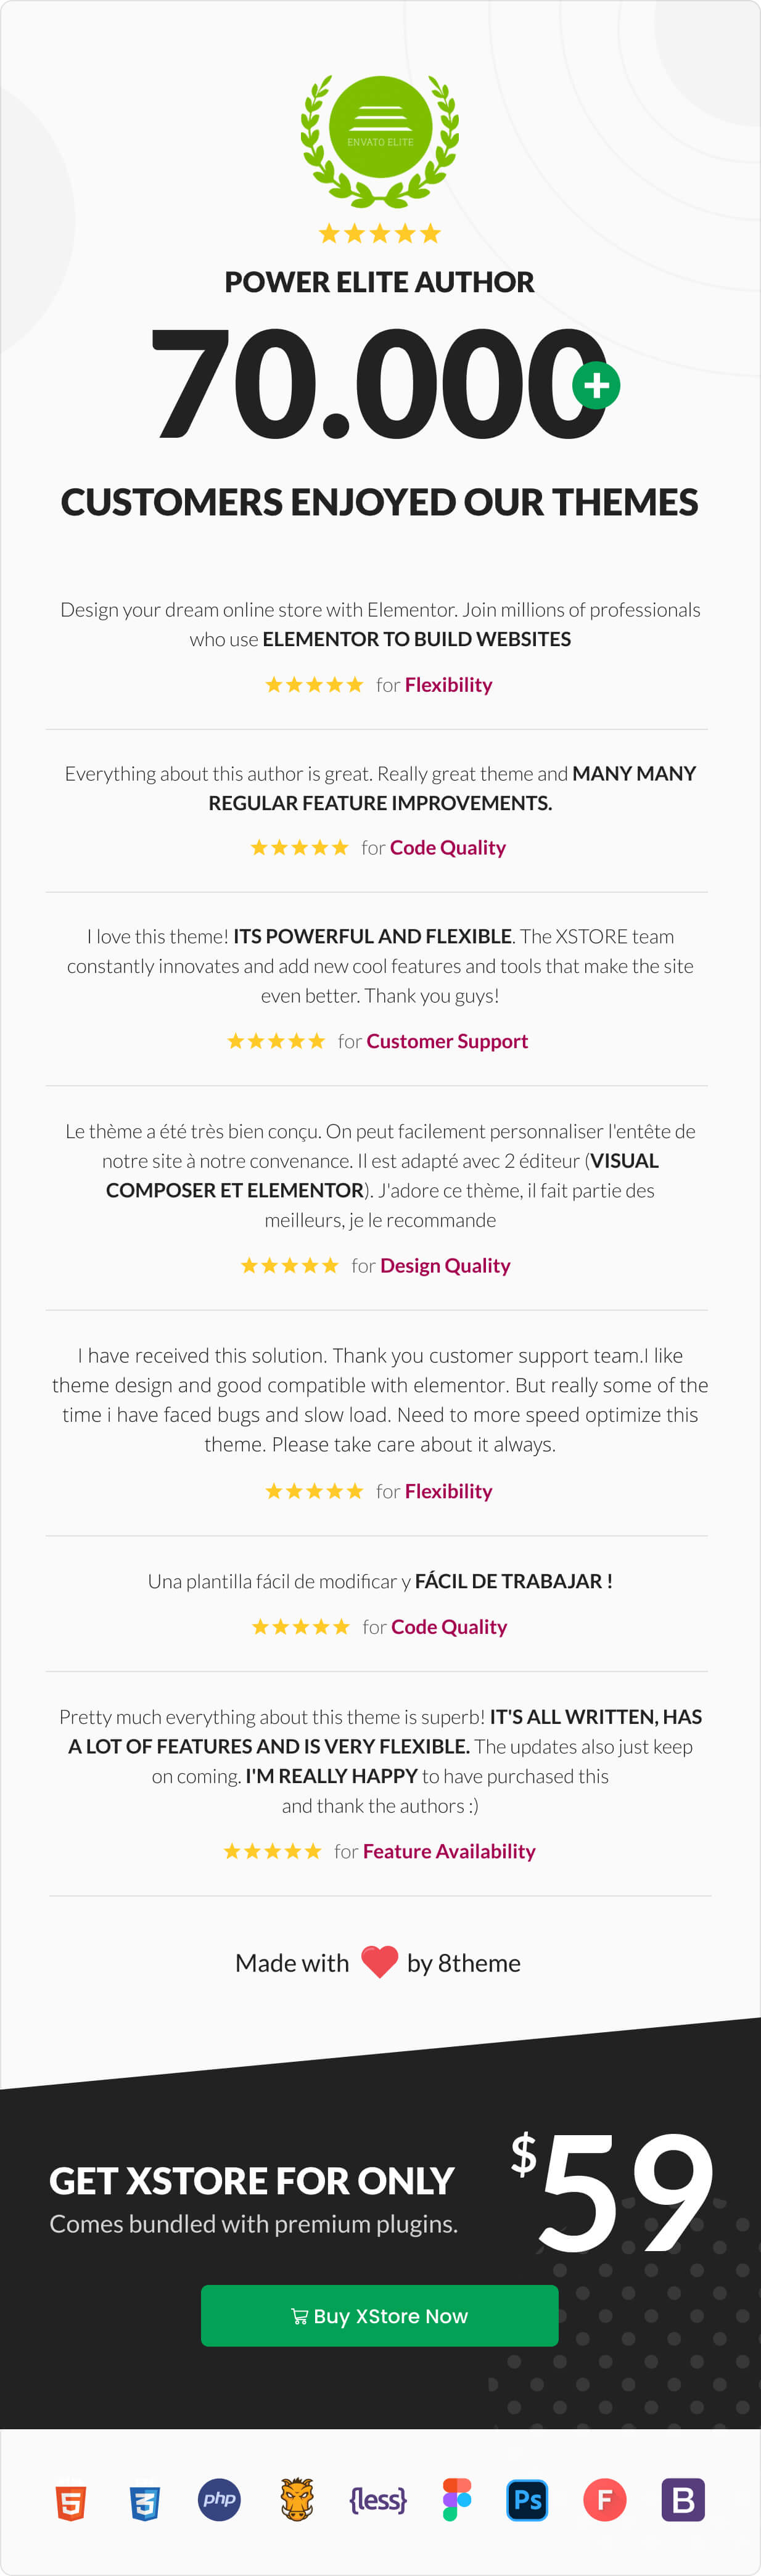 XStore | Multipurpose WooCommerce Theme - 29